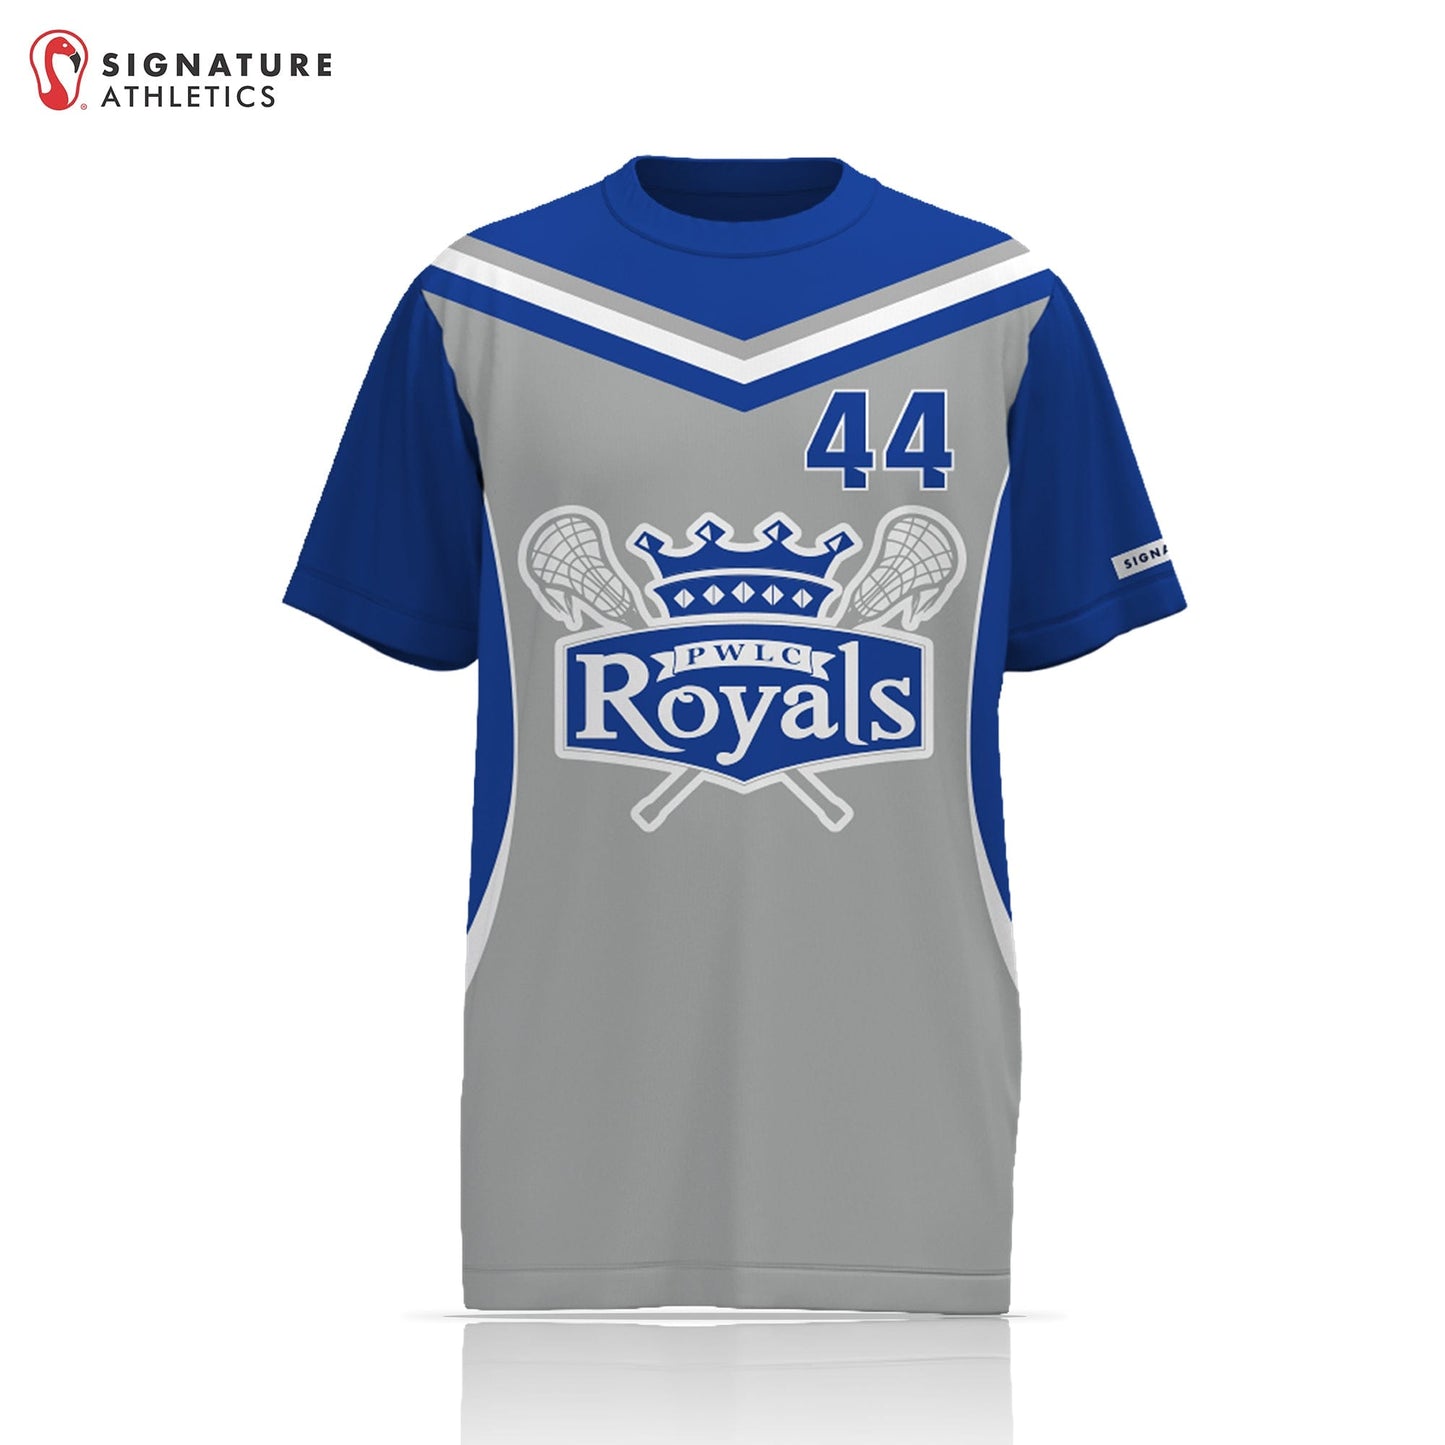 Prince William Lacrosse Club - Royals Unisex Performance Short Sleeve Shooting Shirt - Basic 2.0:Boys 2034 Signature Lacrosse